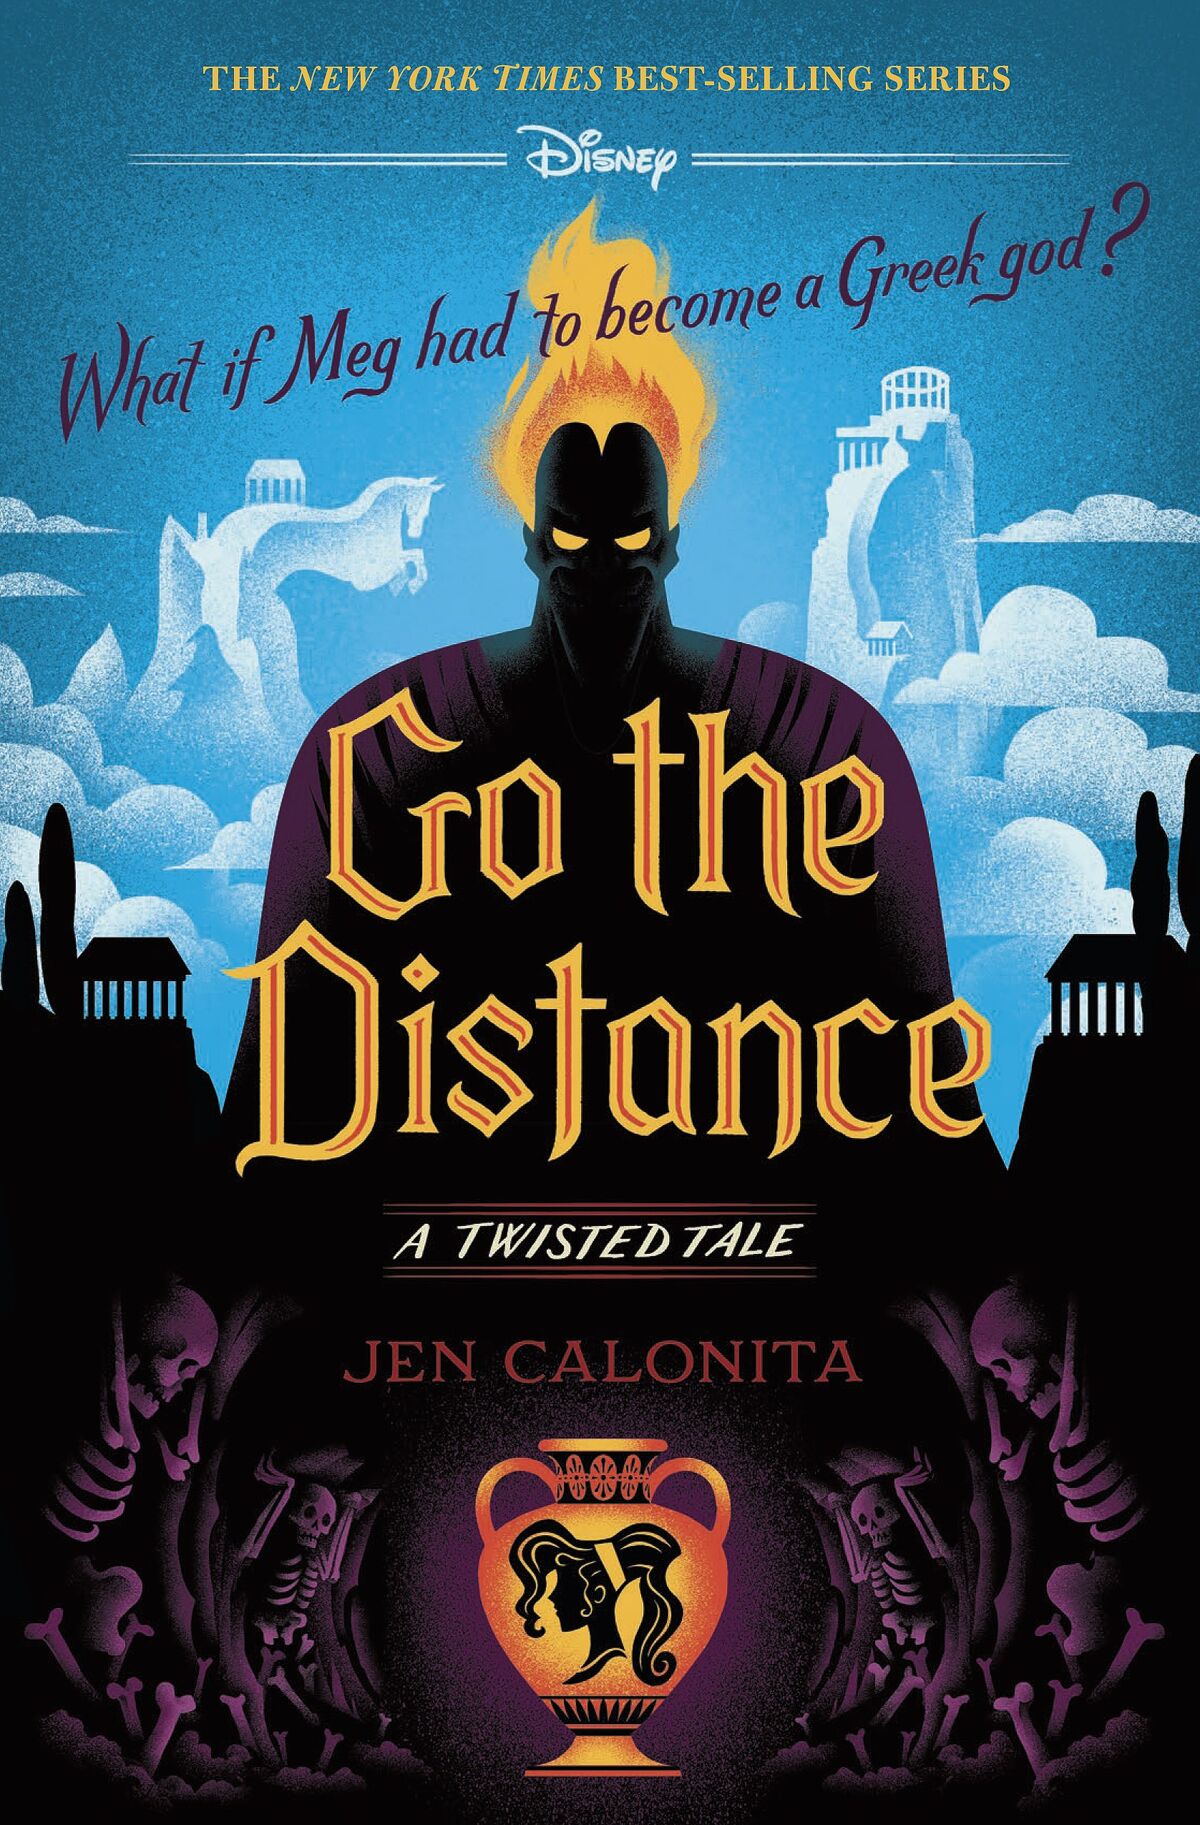 A Twisted Tale Jen Calonita книга. Jen Calonita a Twisted Tale. Go the distance. Twisted Tales.